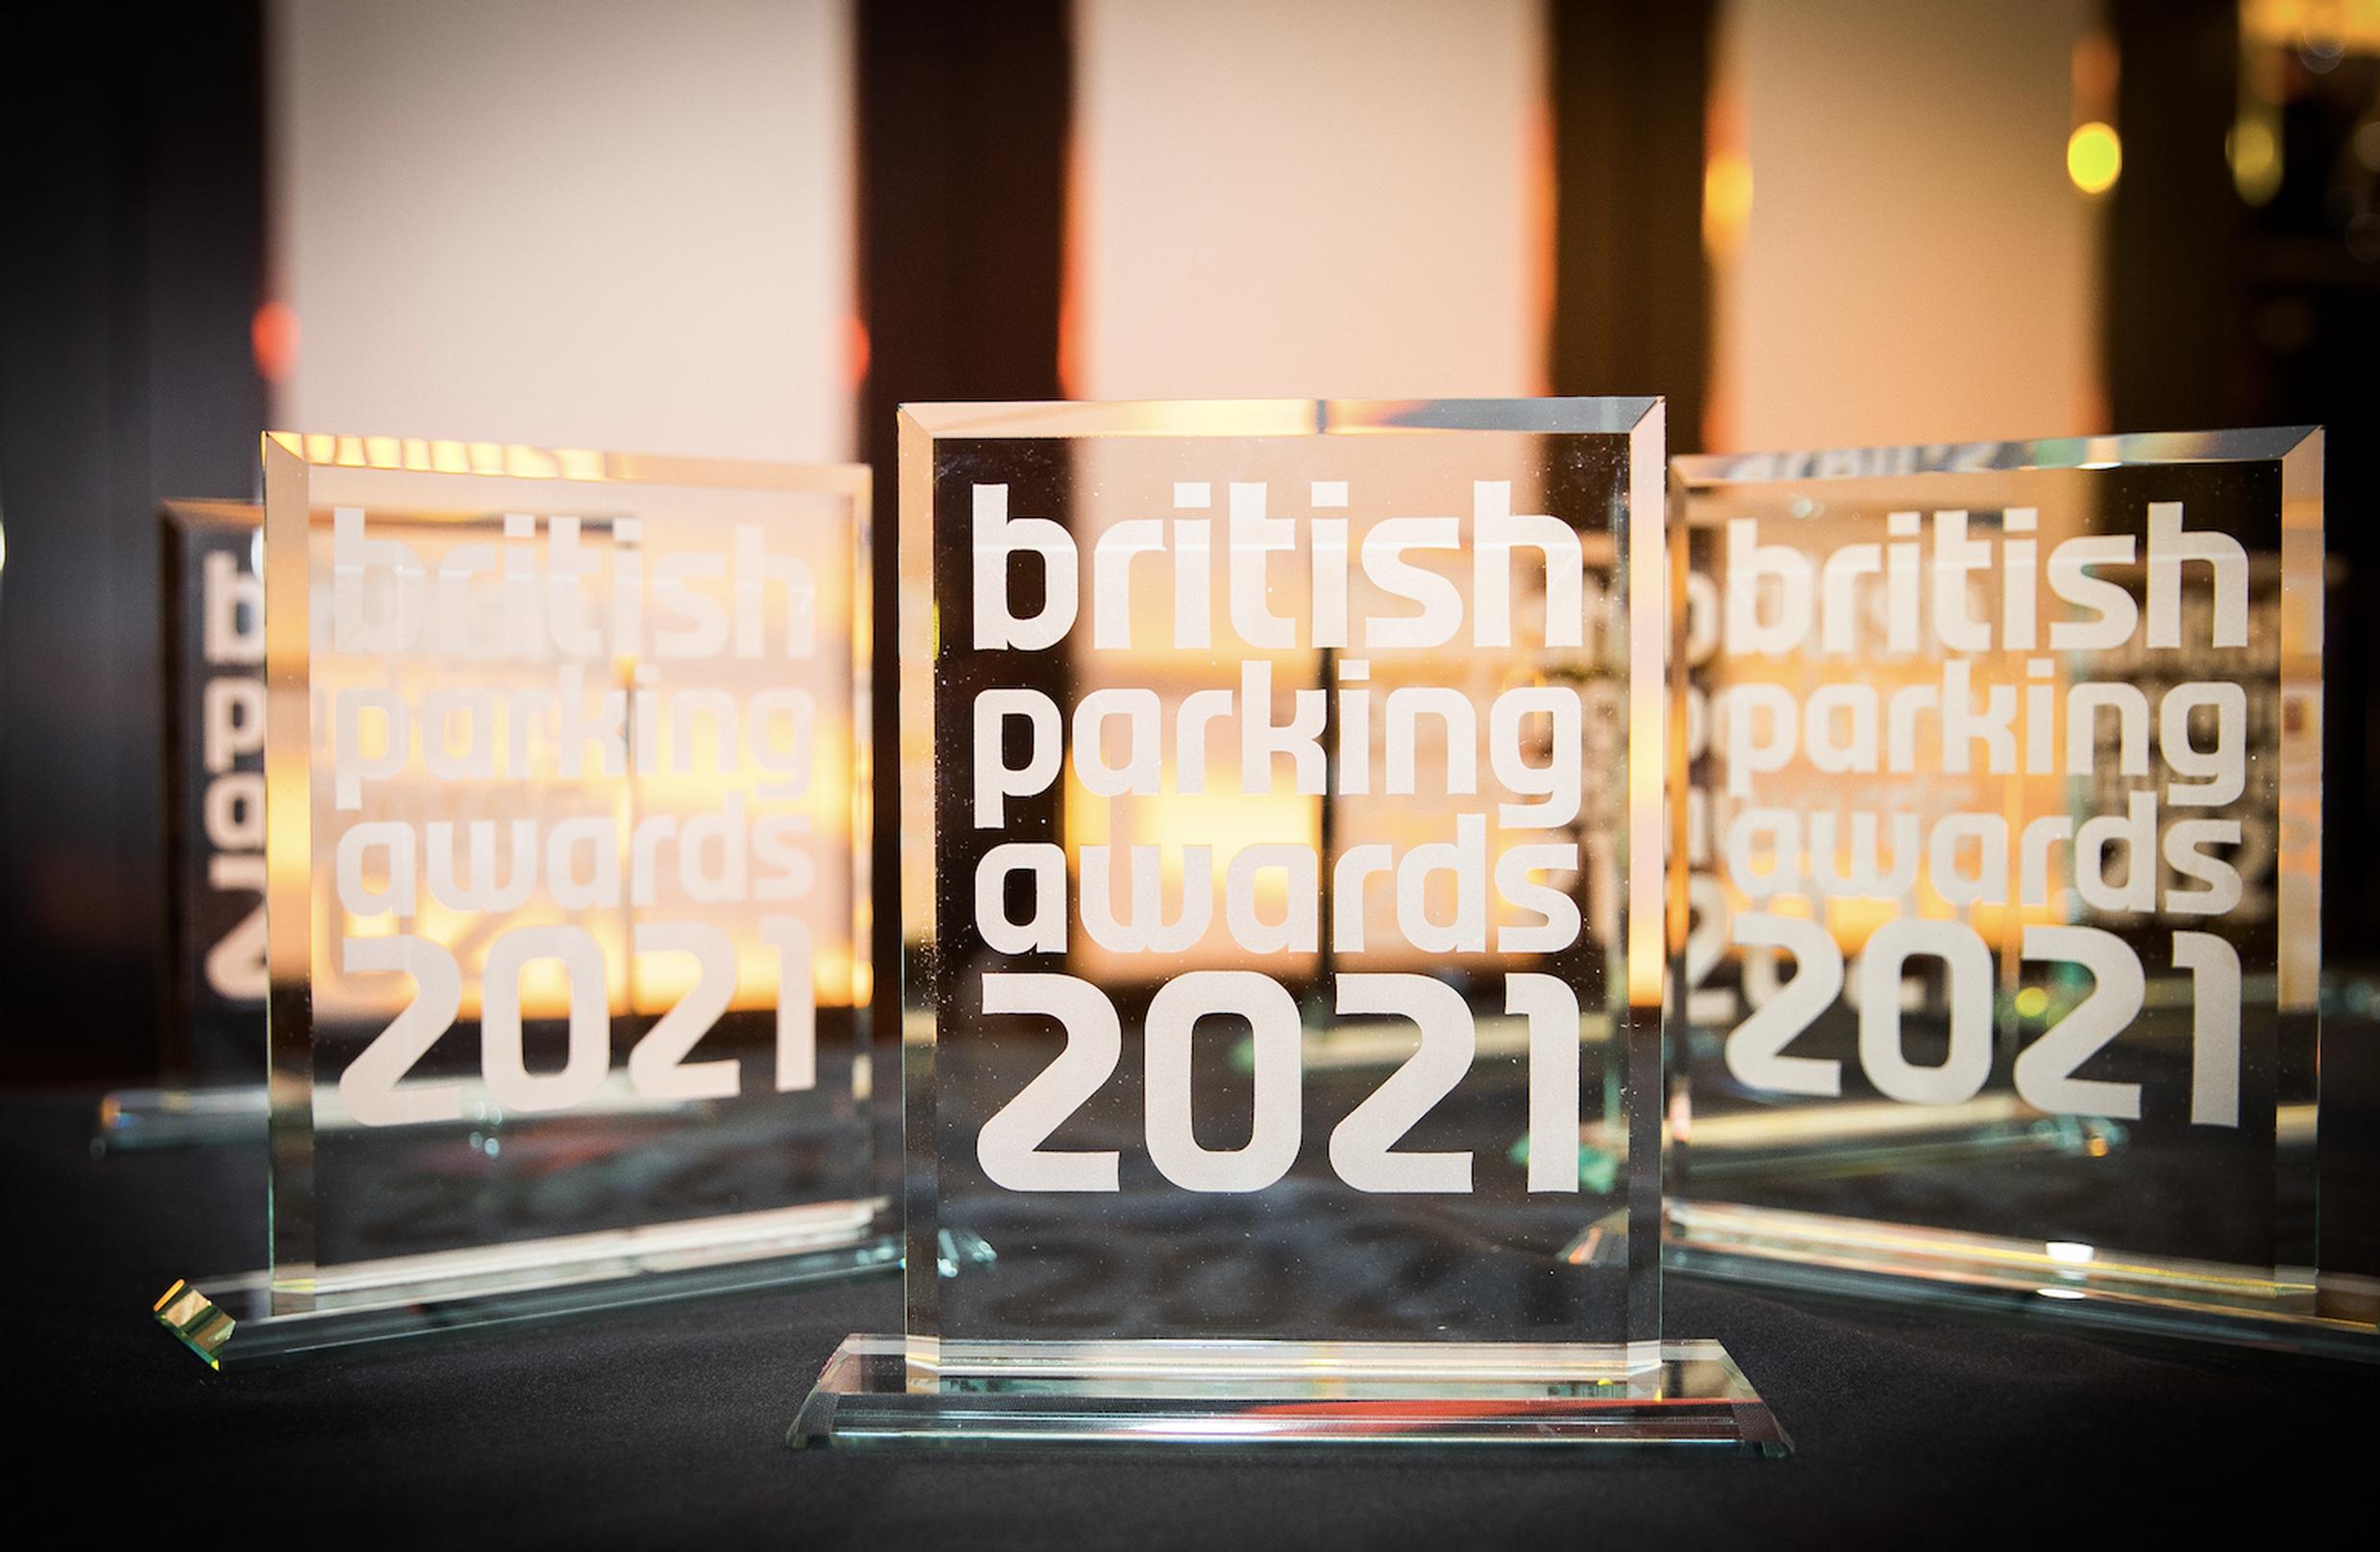 The British Parking Awards 2021 trophy